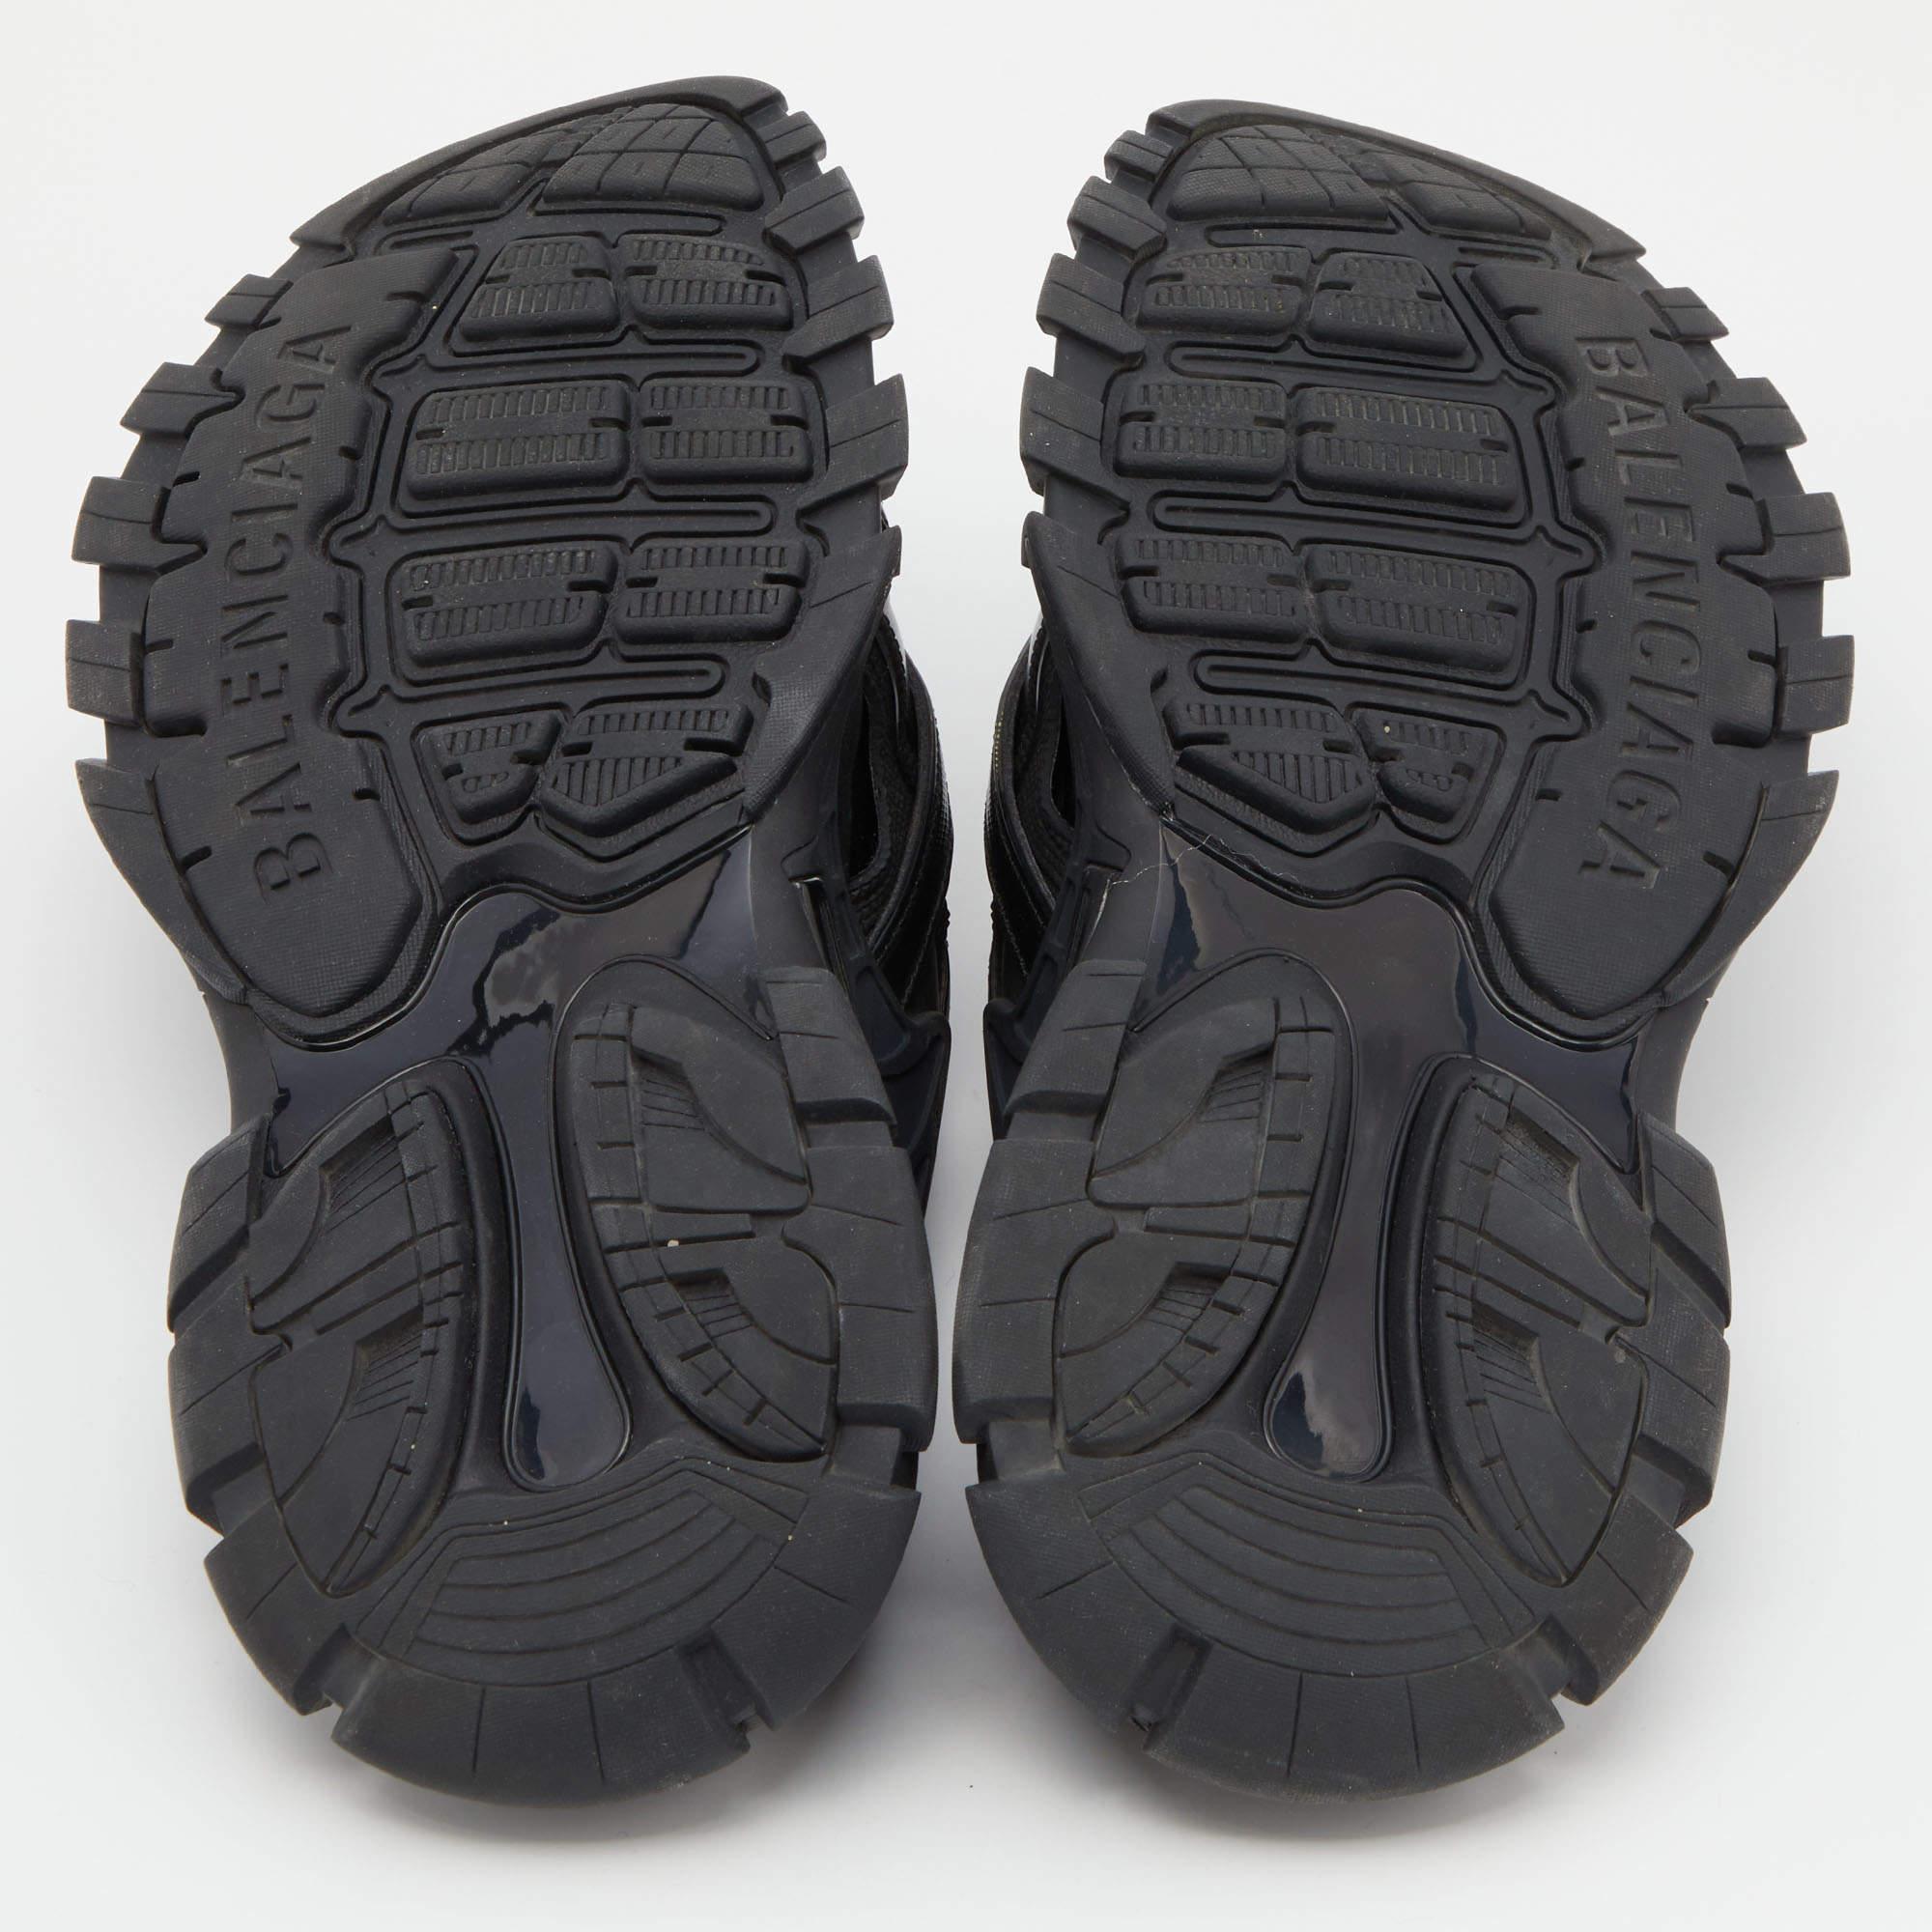 Balenicaga Black Neoprene and Leather Track Slide Sandals Size 40 2